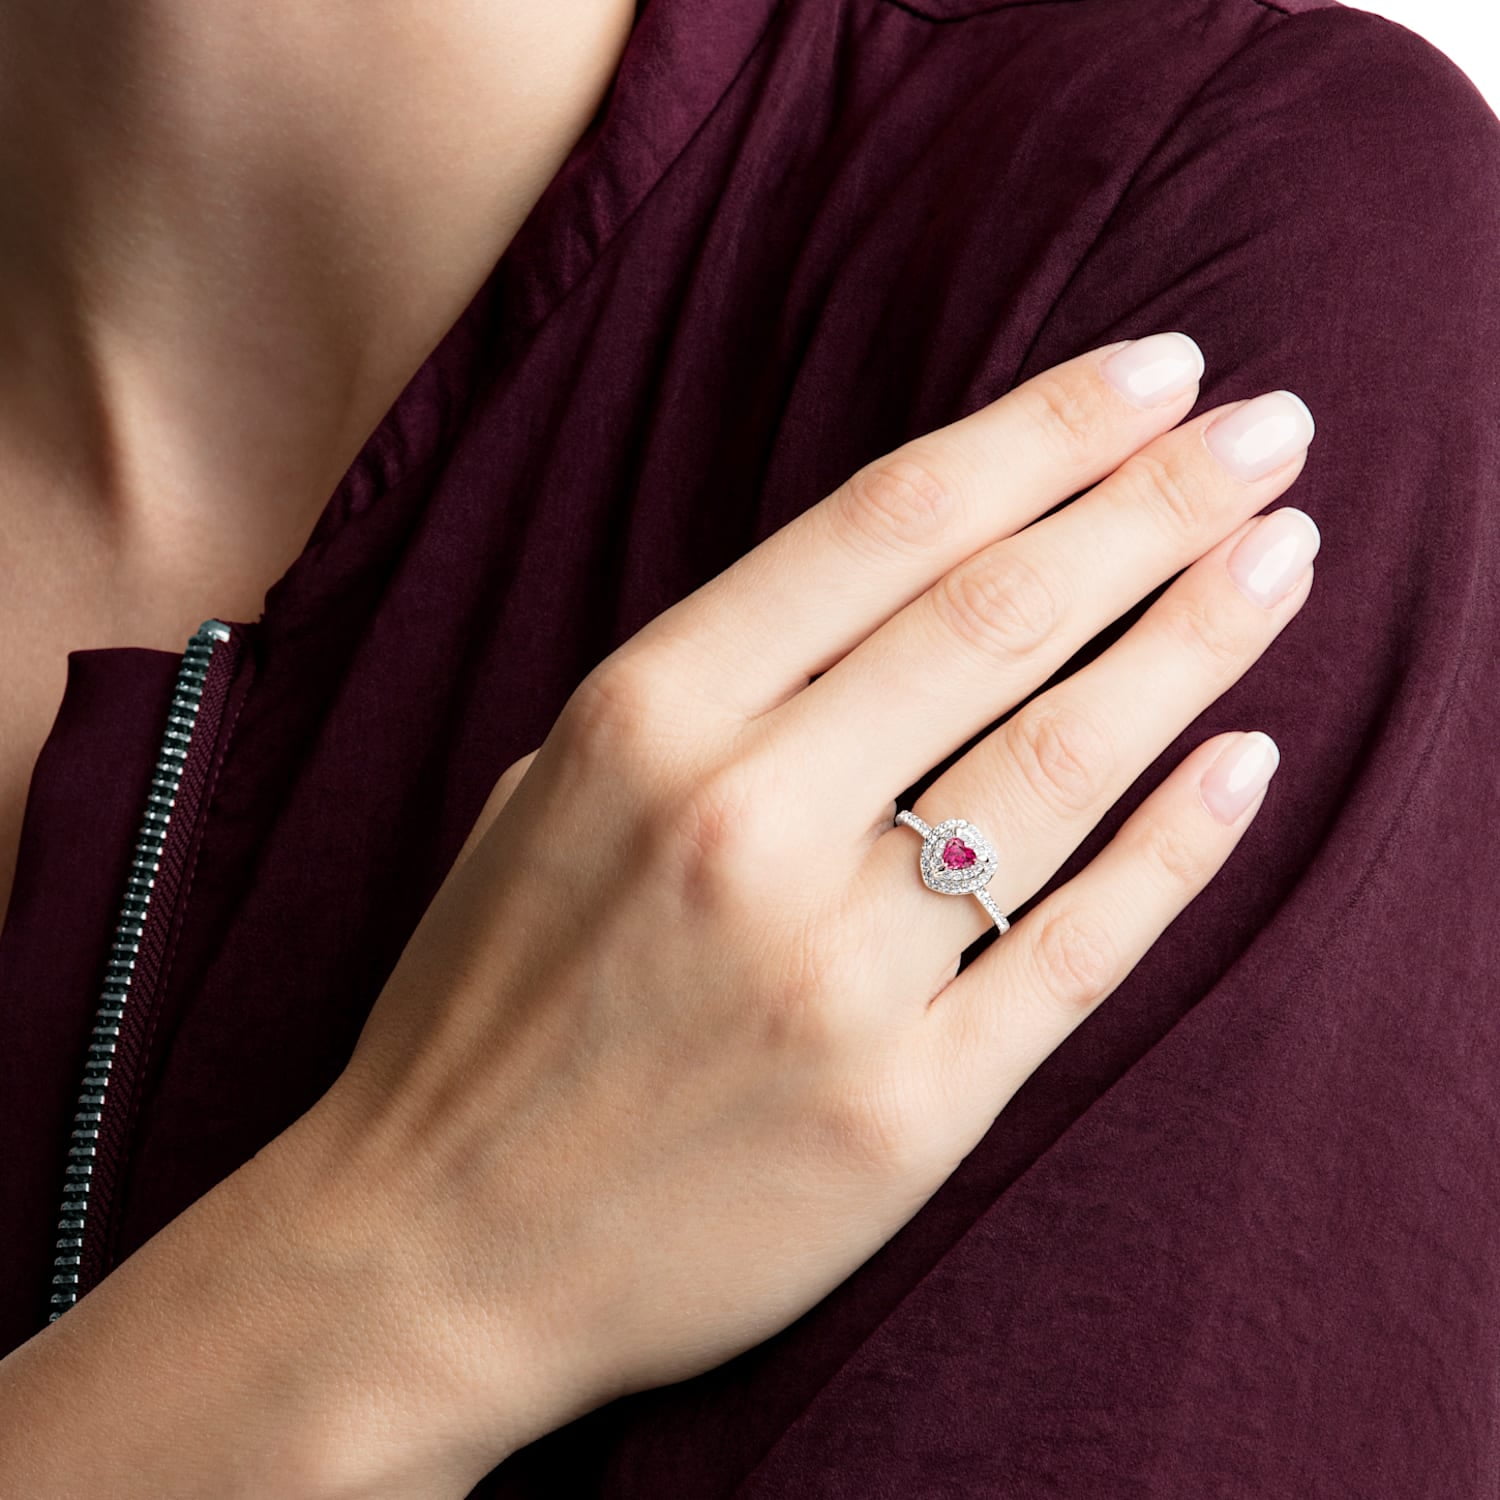 Emerald Cut Moissanite Solitaire Diamond Engagement Ring | Radiant cut  engagement rings, Bridal engagement rings, Engagement ring cuts